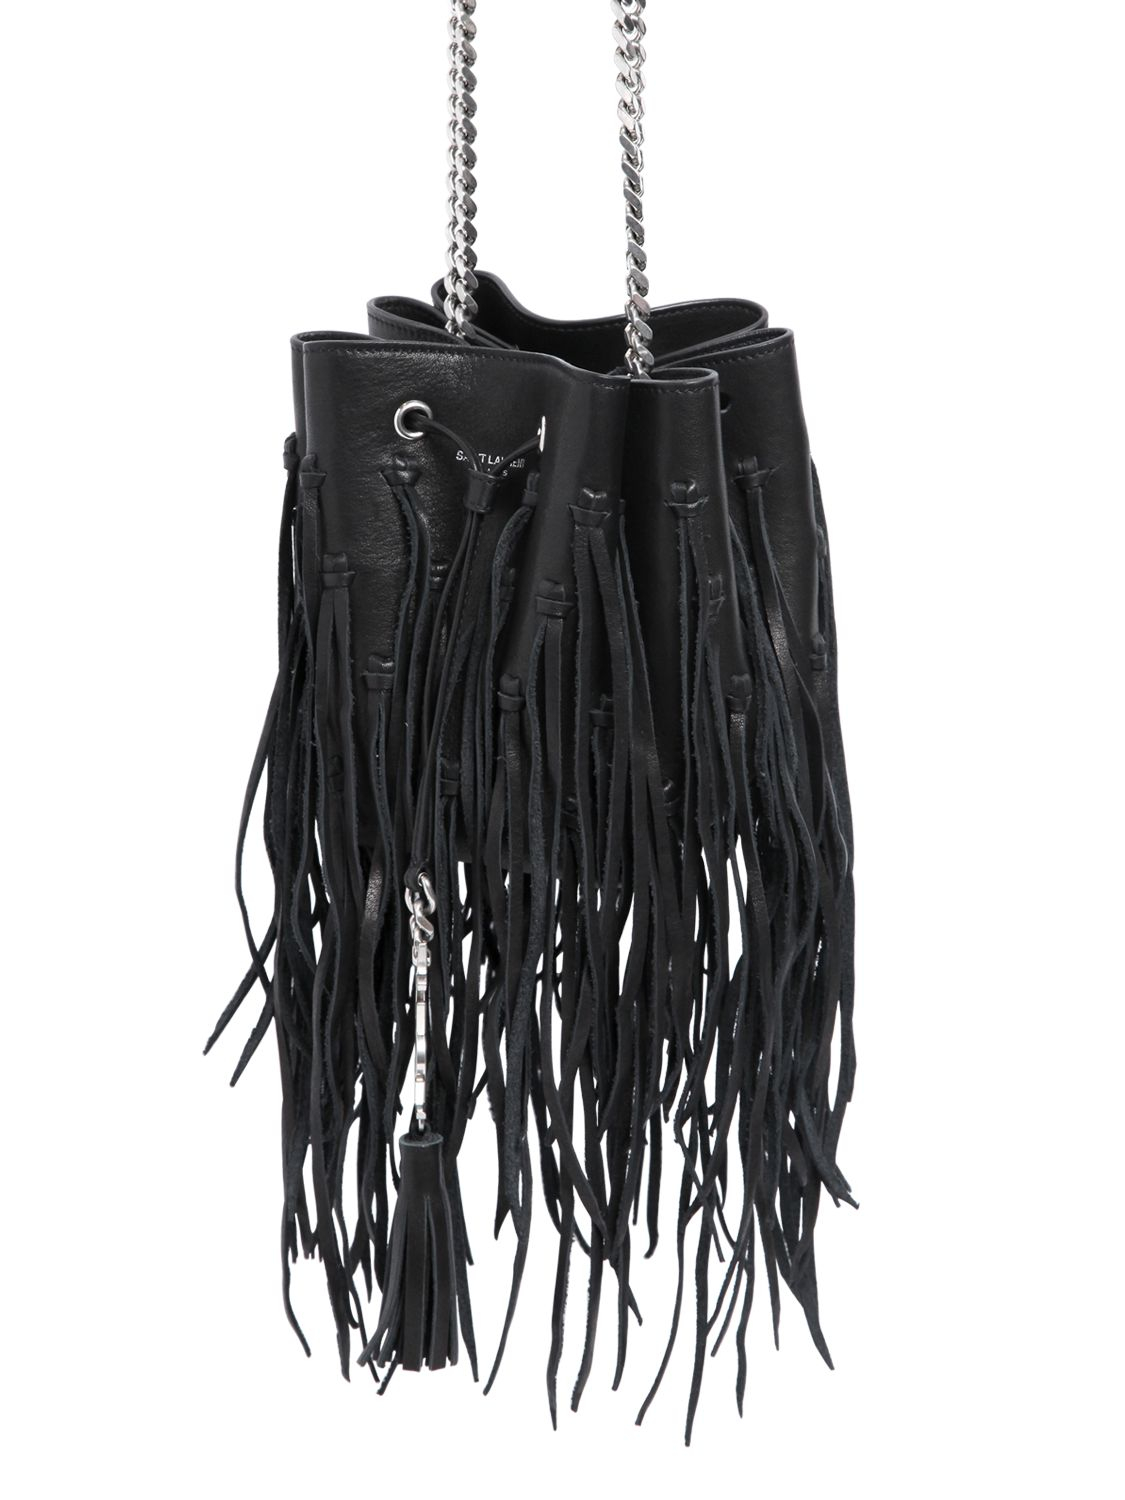 Saint Laurent Ysl Pendant Fringed Leather Bucket Bag in Black